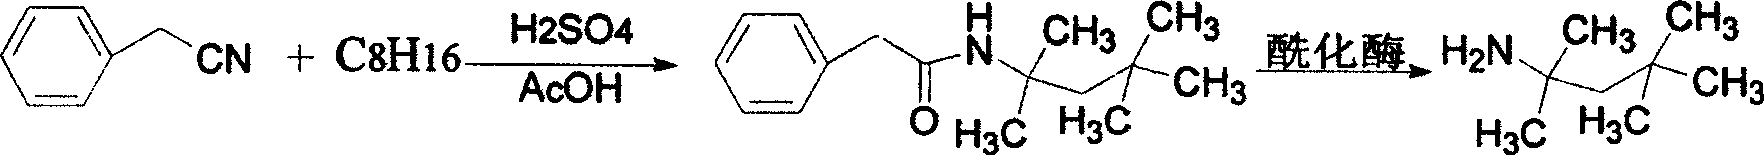 Process for preparing tert-octylamine